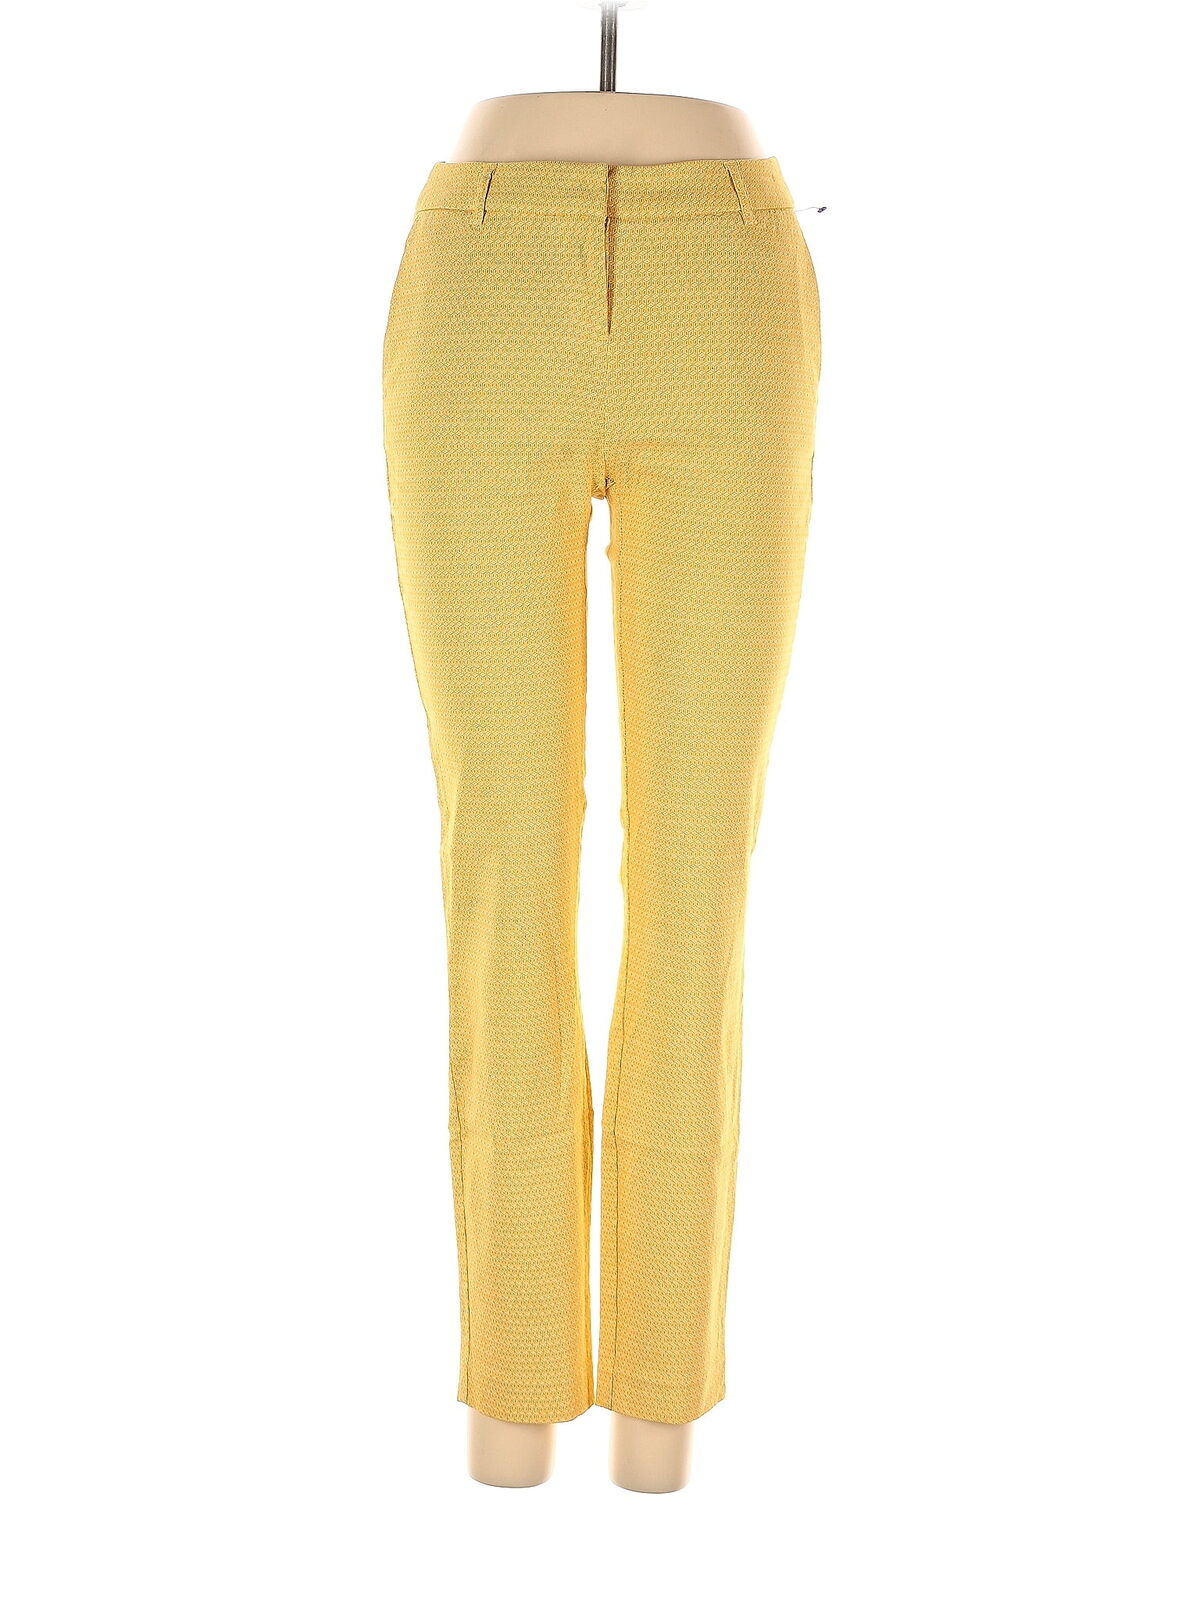 Cynthia Rowley TJX Women Yellow Khakis 2 - image 1